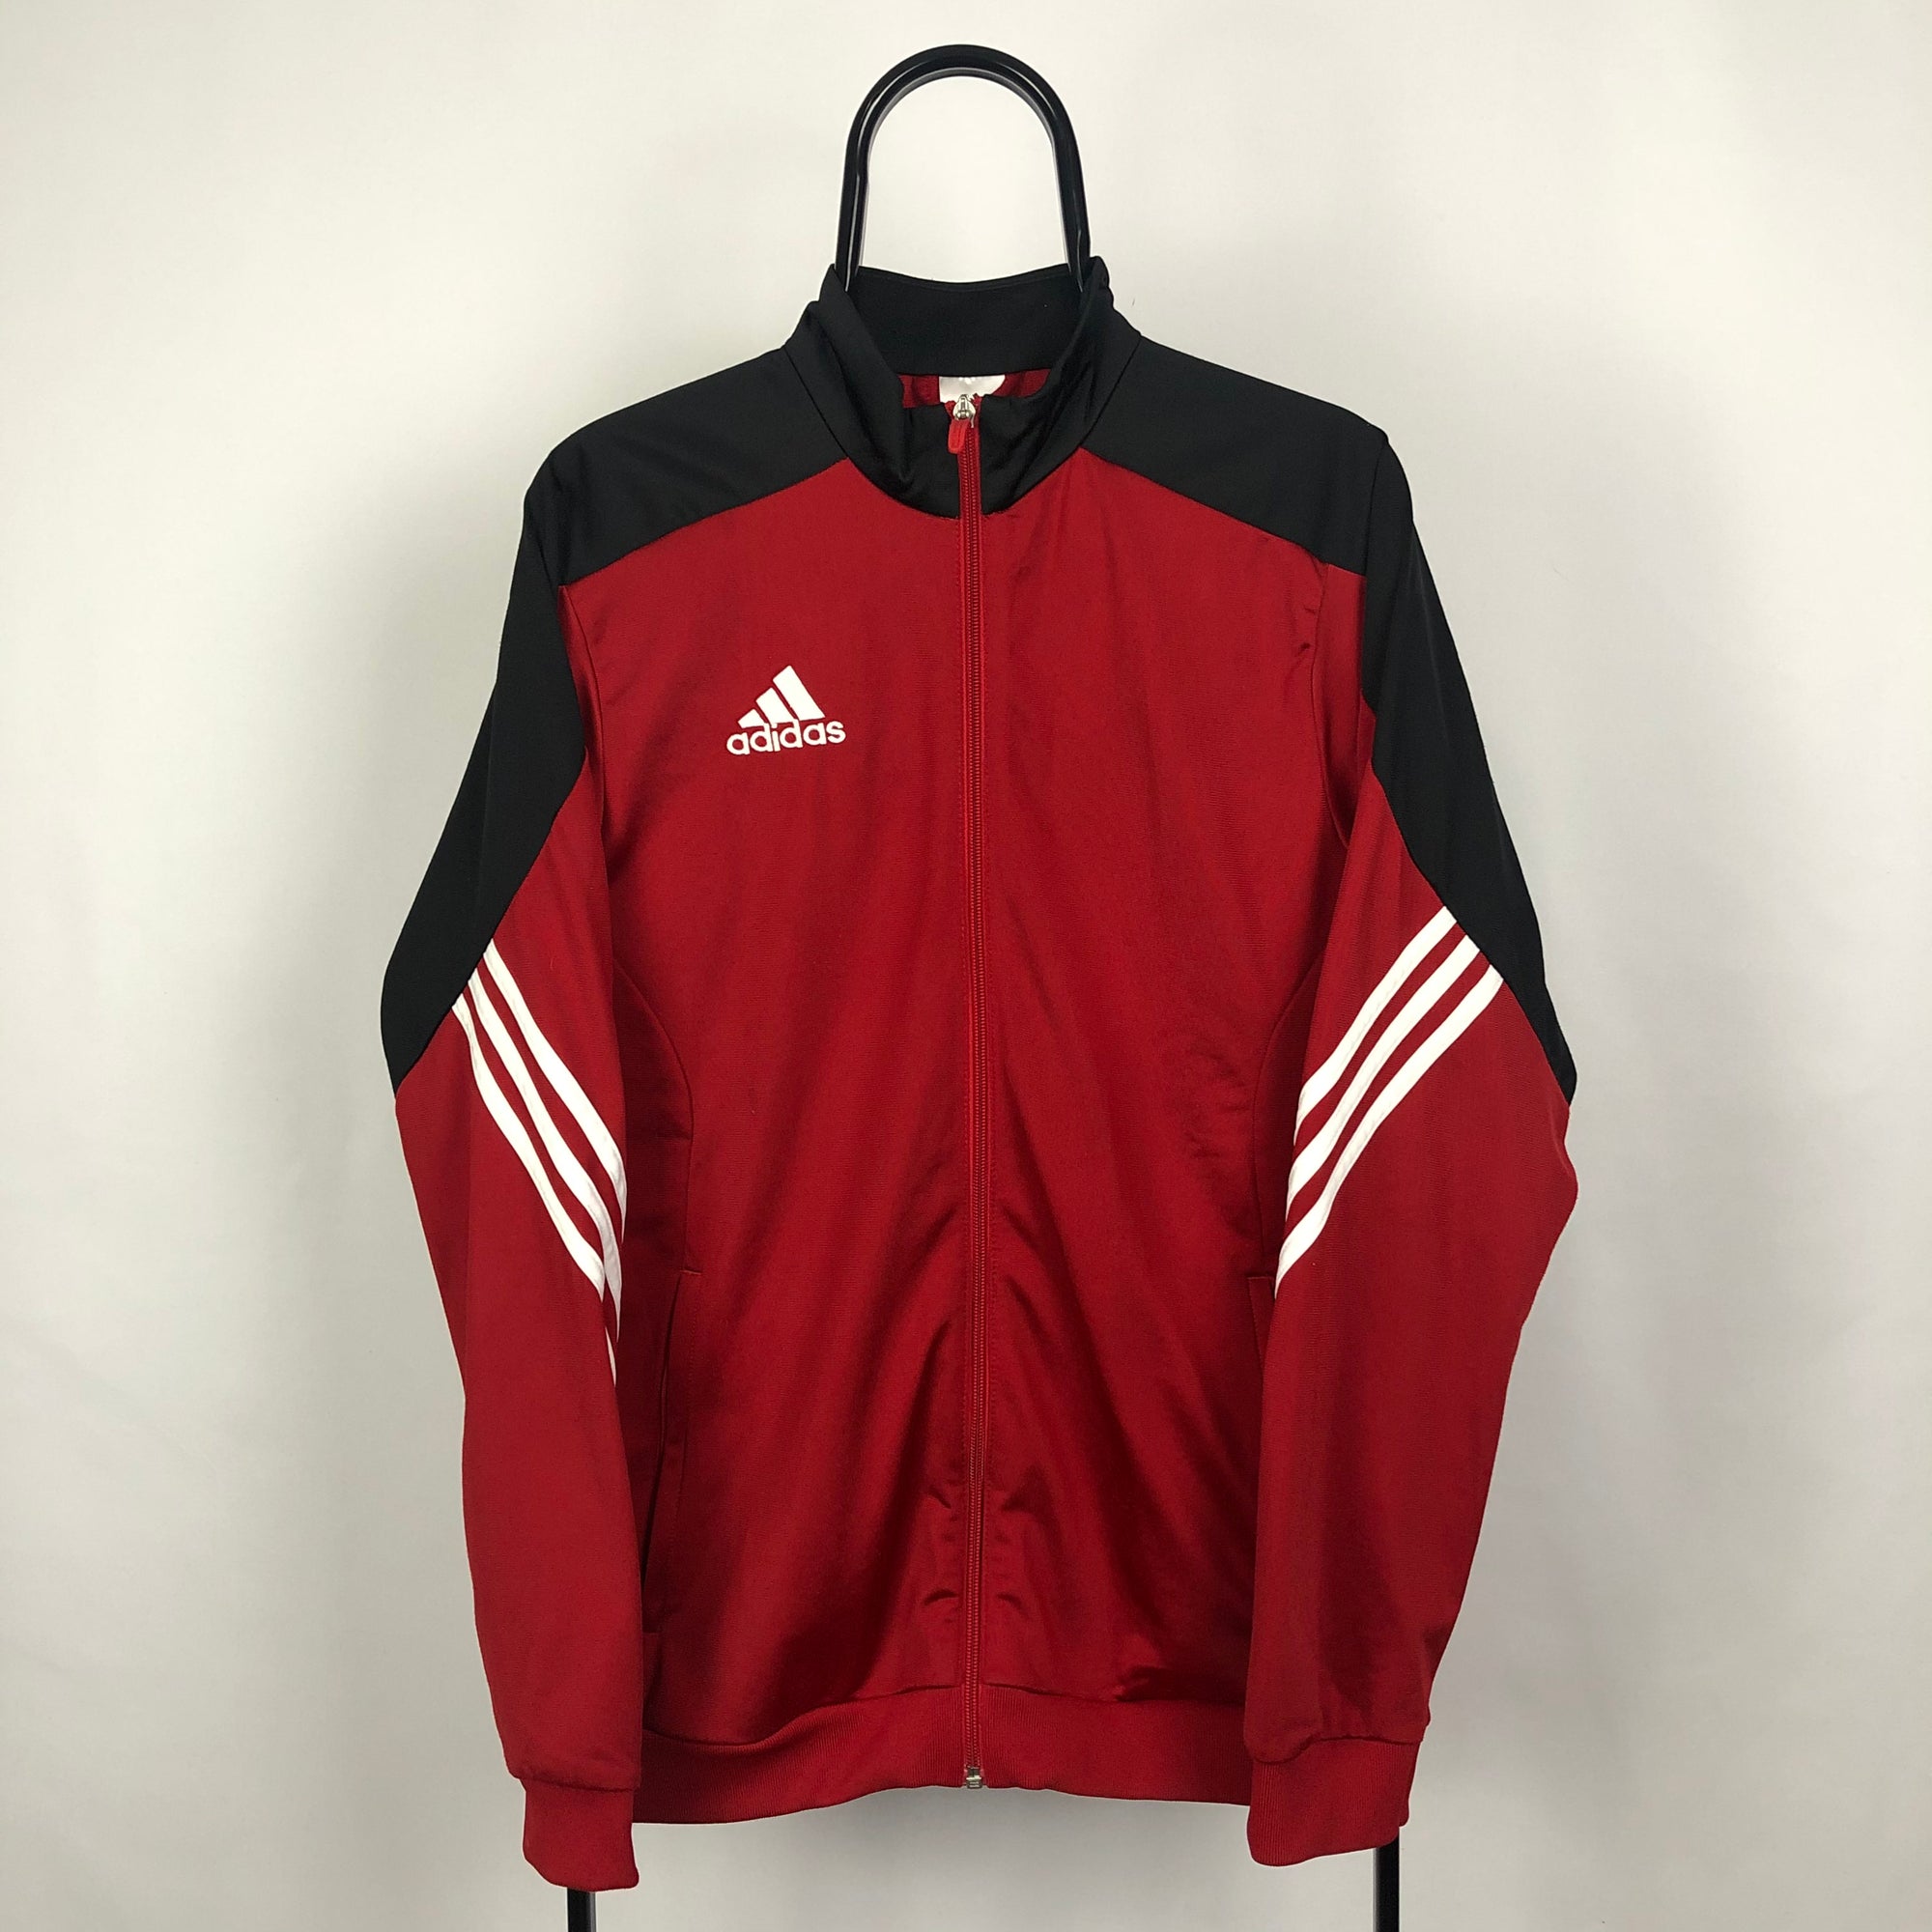 Adidas Track Jacket in Red/Black - Men's Medium/Women's Large